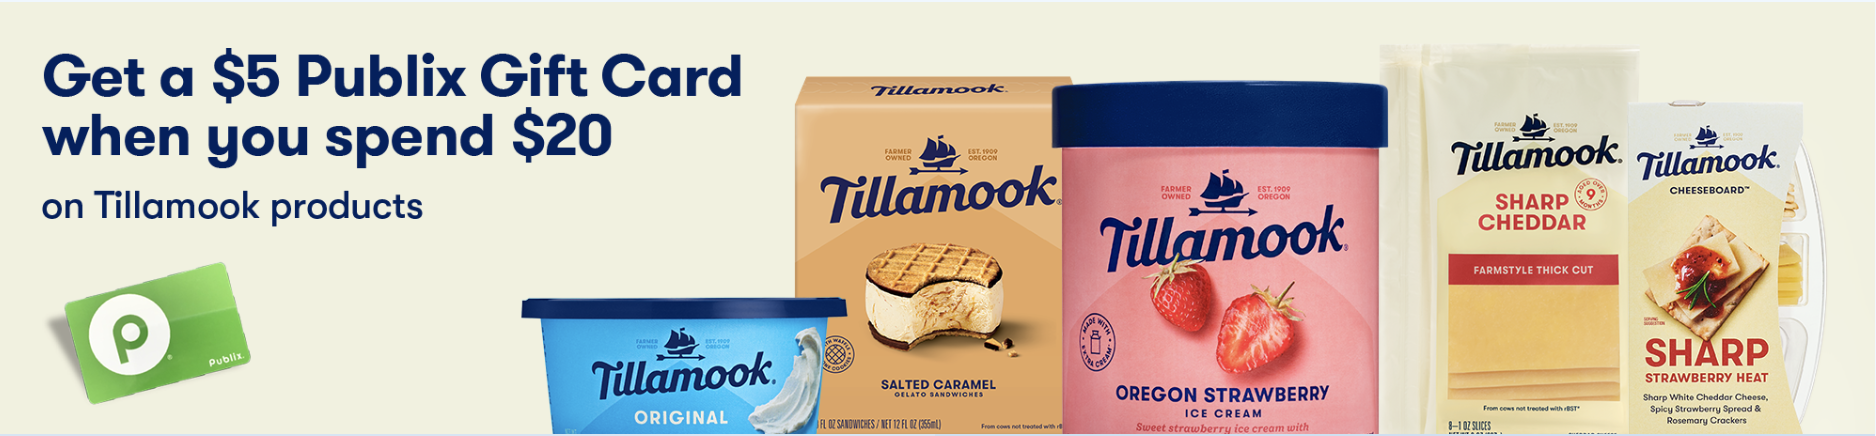 Tillamook Products Make Summer Entertaining Delicious AND Rewarding! on I Heart Publix